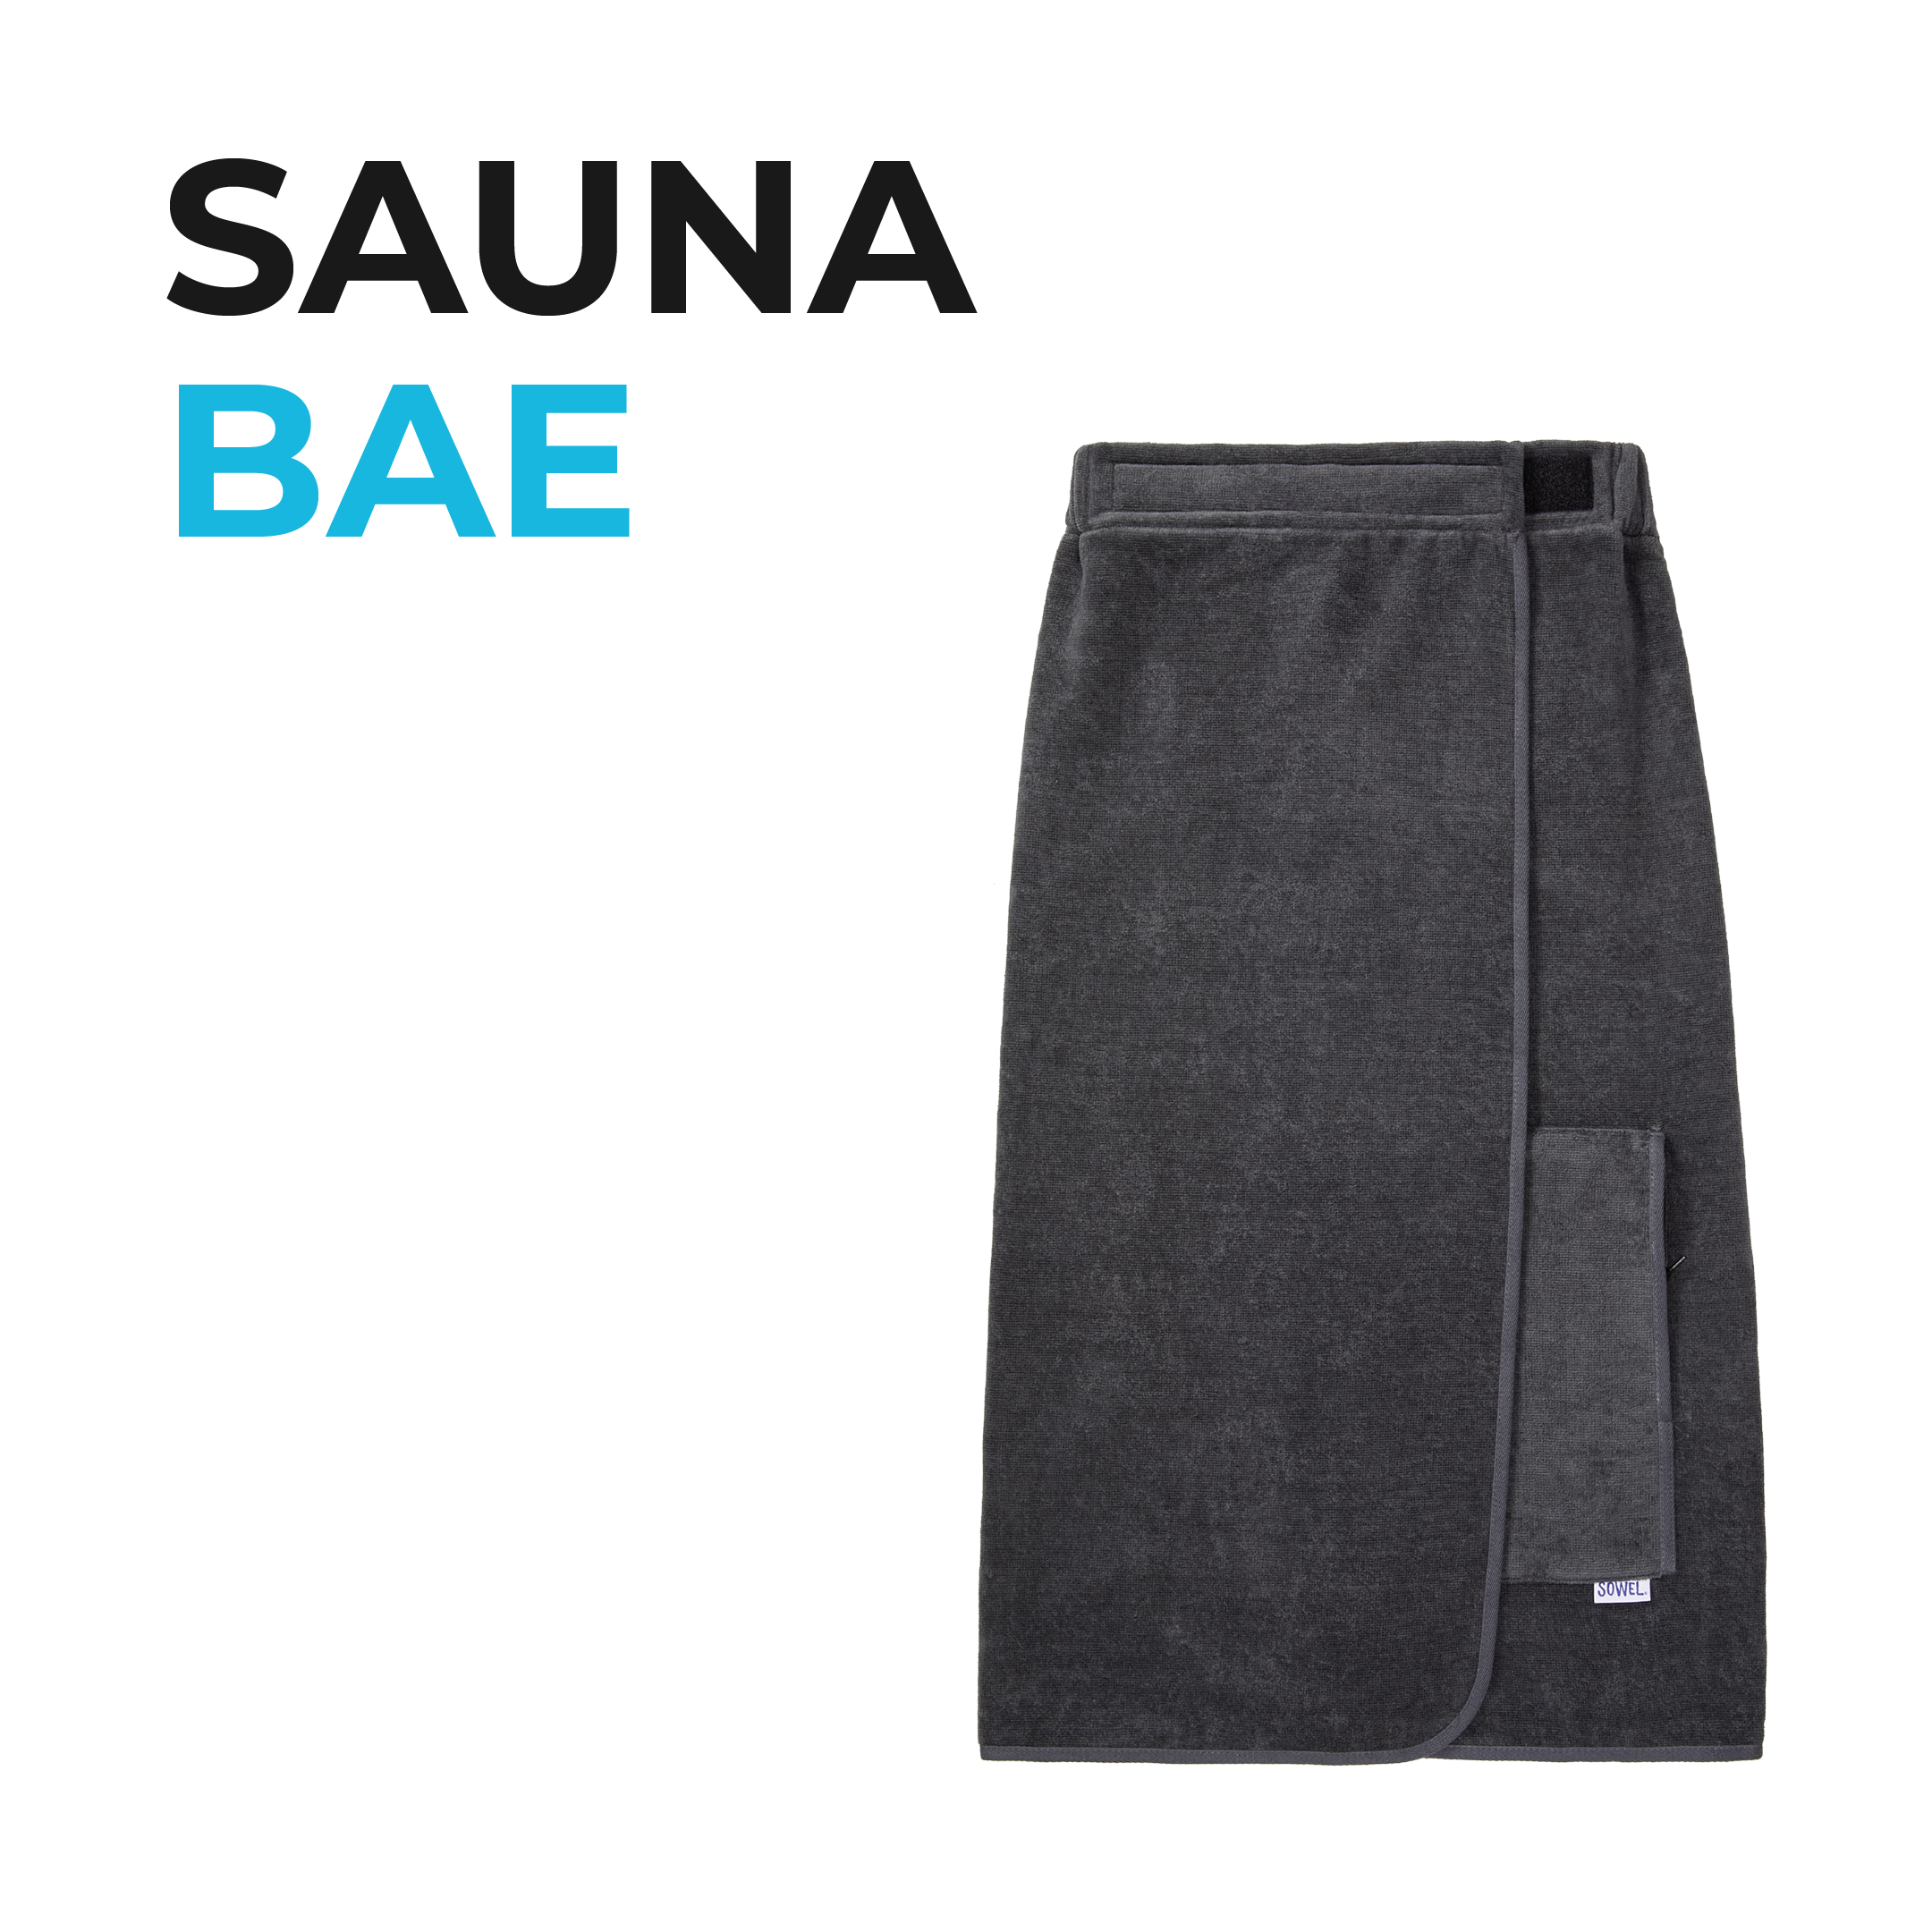 Sowel® Sauna Bae - Saunakilt Damen - Bio-Baumwolle 100